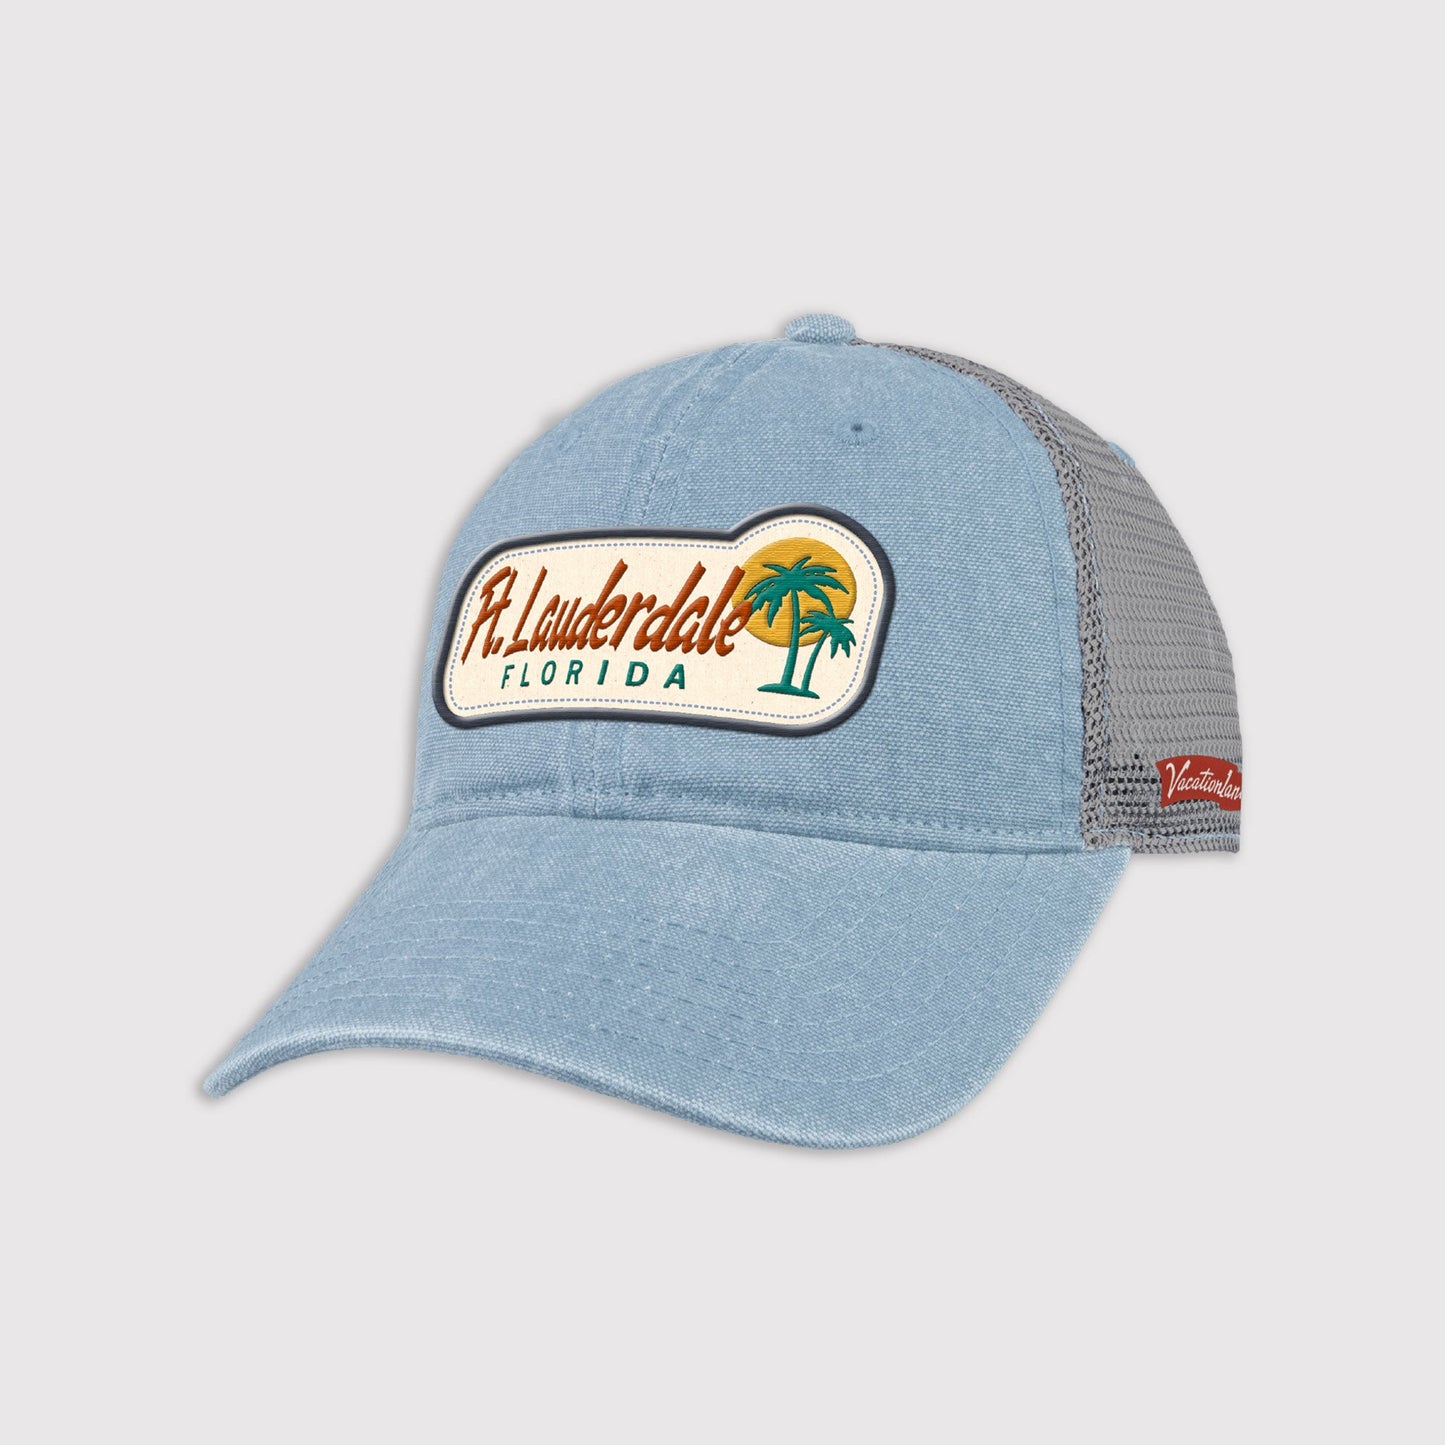 Sunriser Hat - Ft. Lauderdale